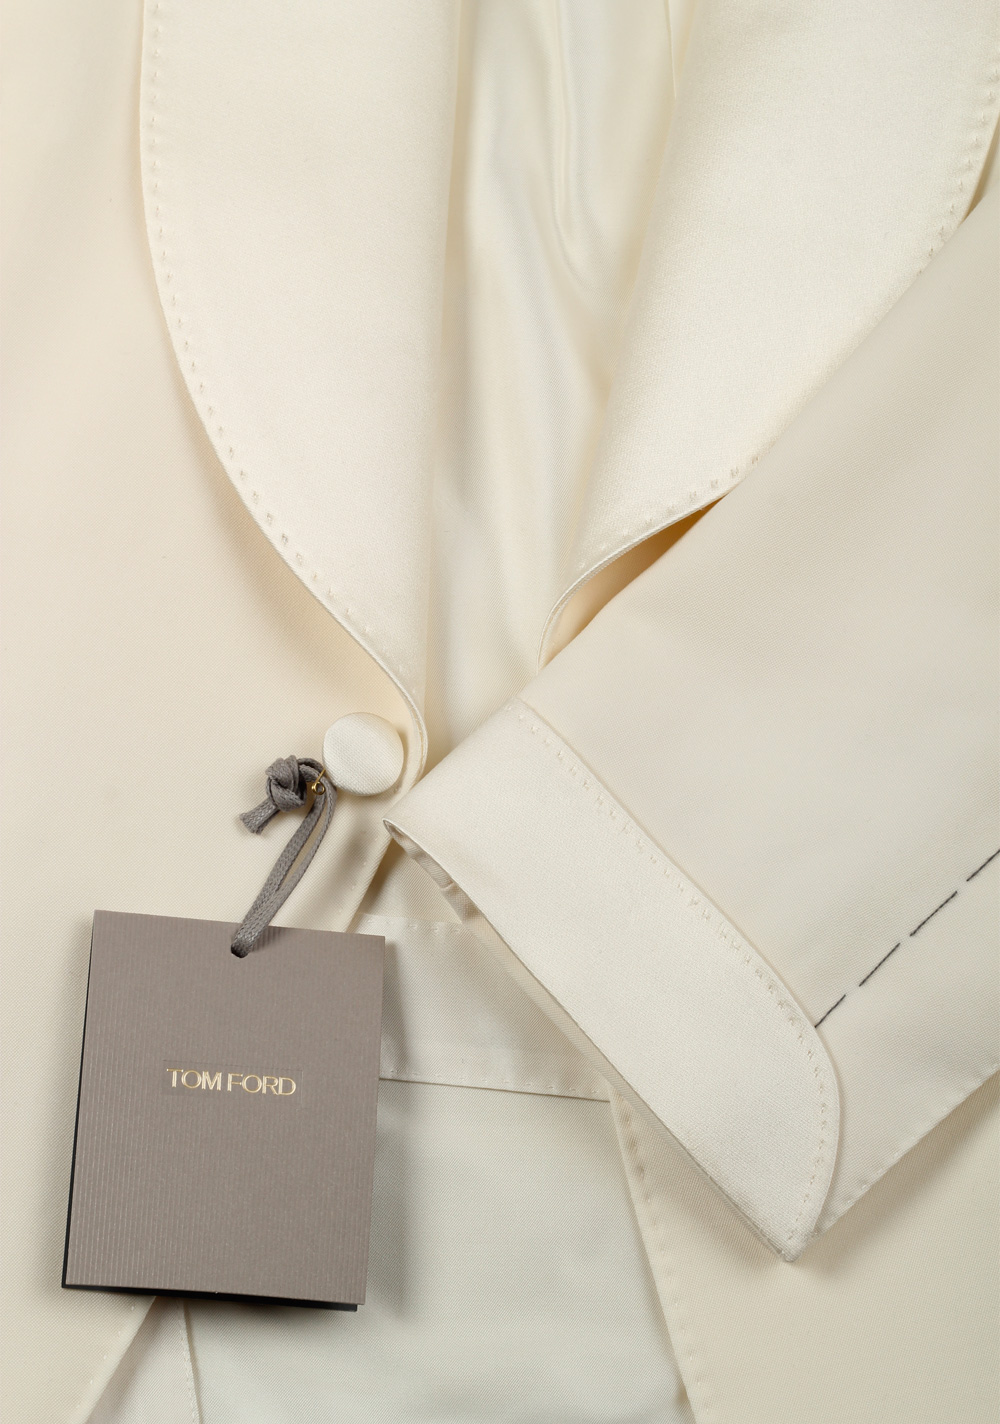 TOM FORD Shelton Ivory Sport Coat Tuxedo Dinner Jacket Size 56 / 46R U.S. | Costume Limité